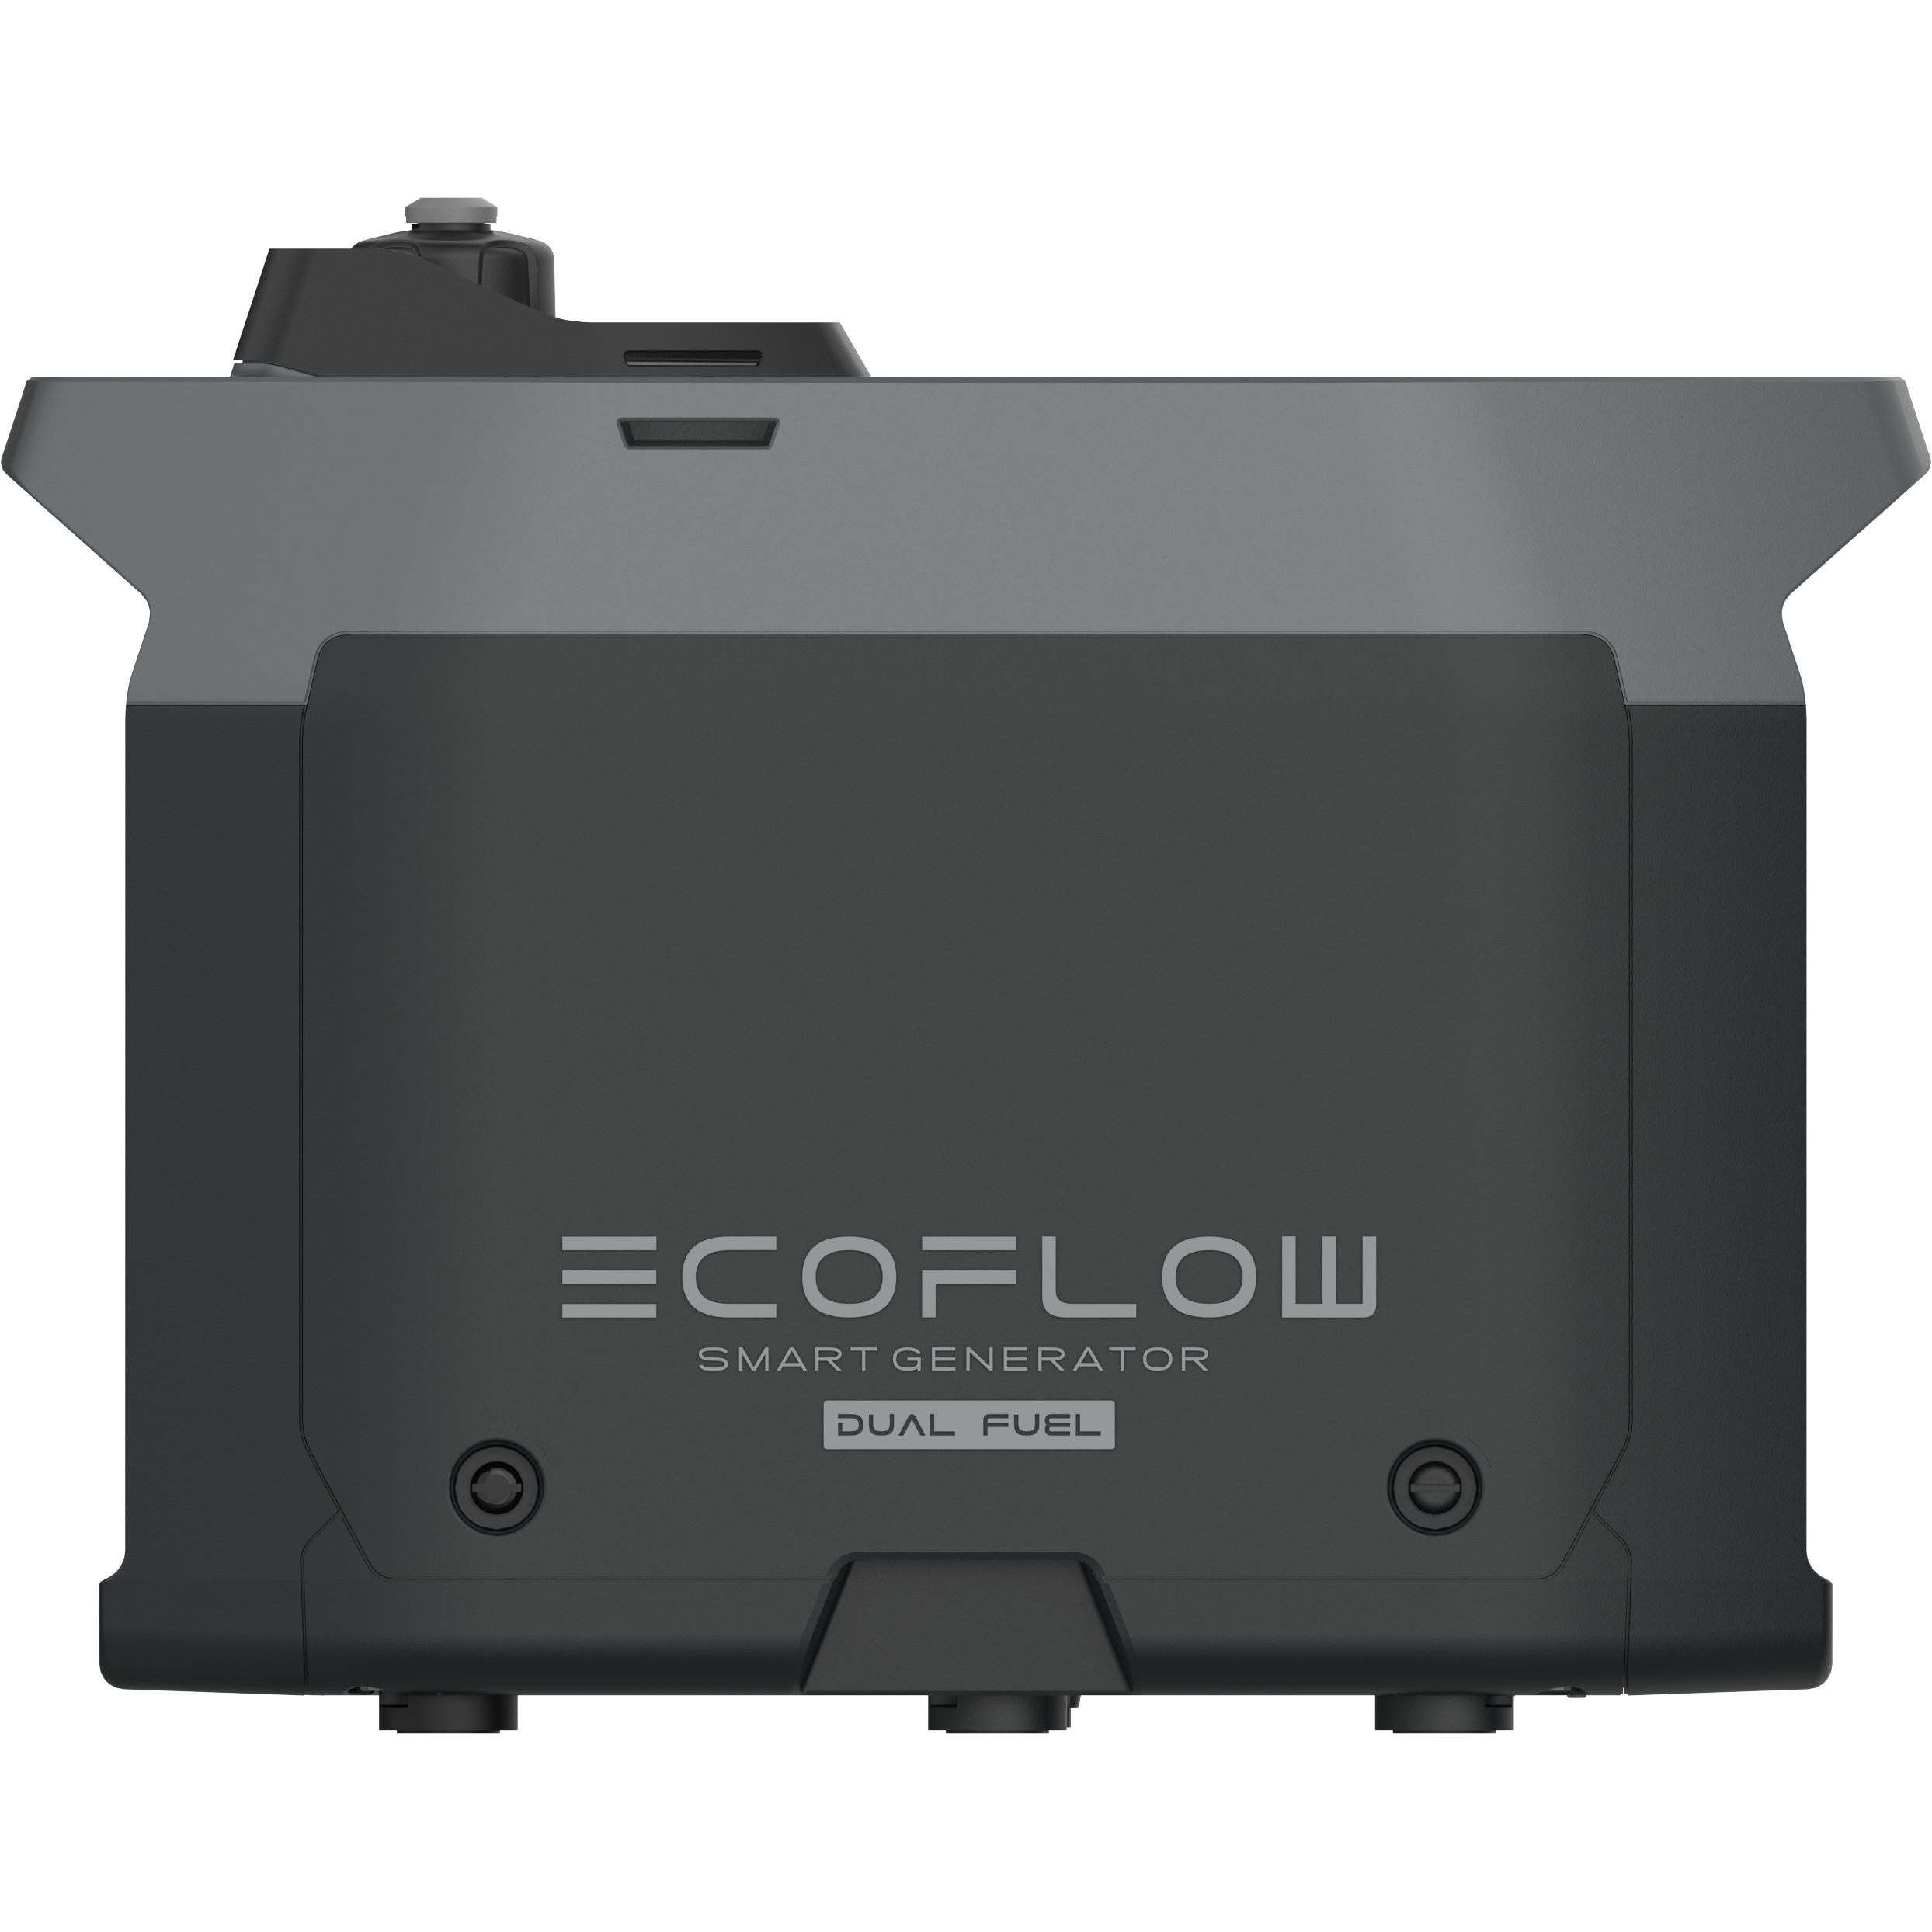 EcoFlow Smart Generator (Dual Fuel) - New Star Living